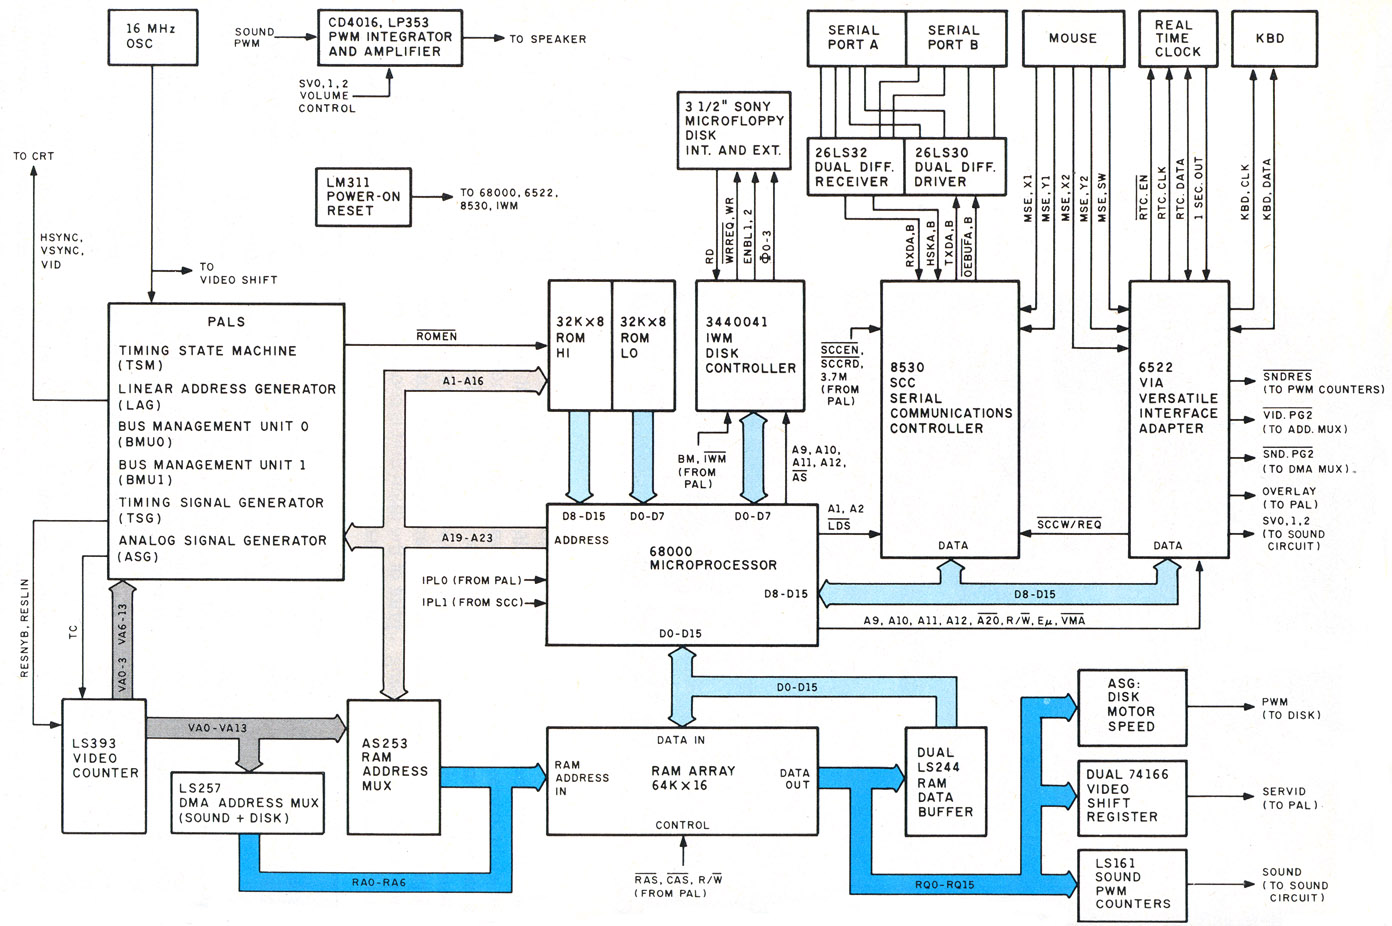 system architecture diagram visio template